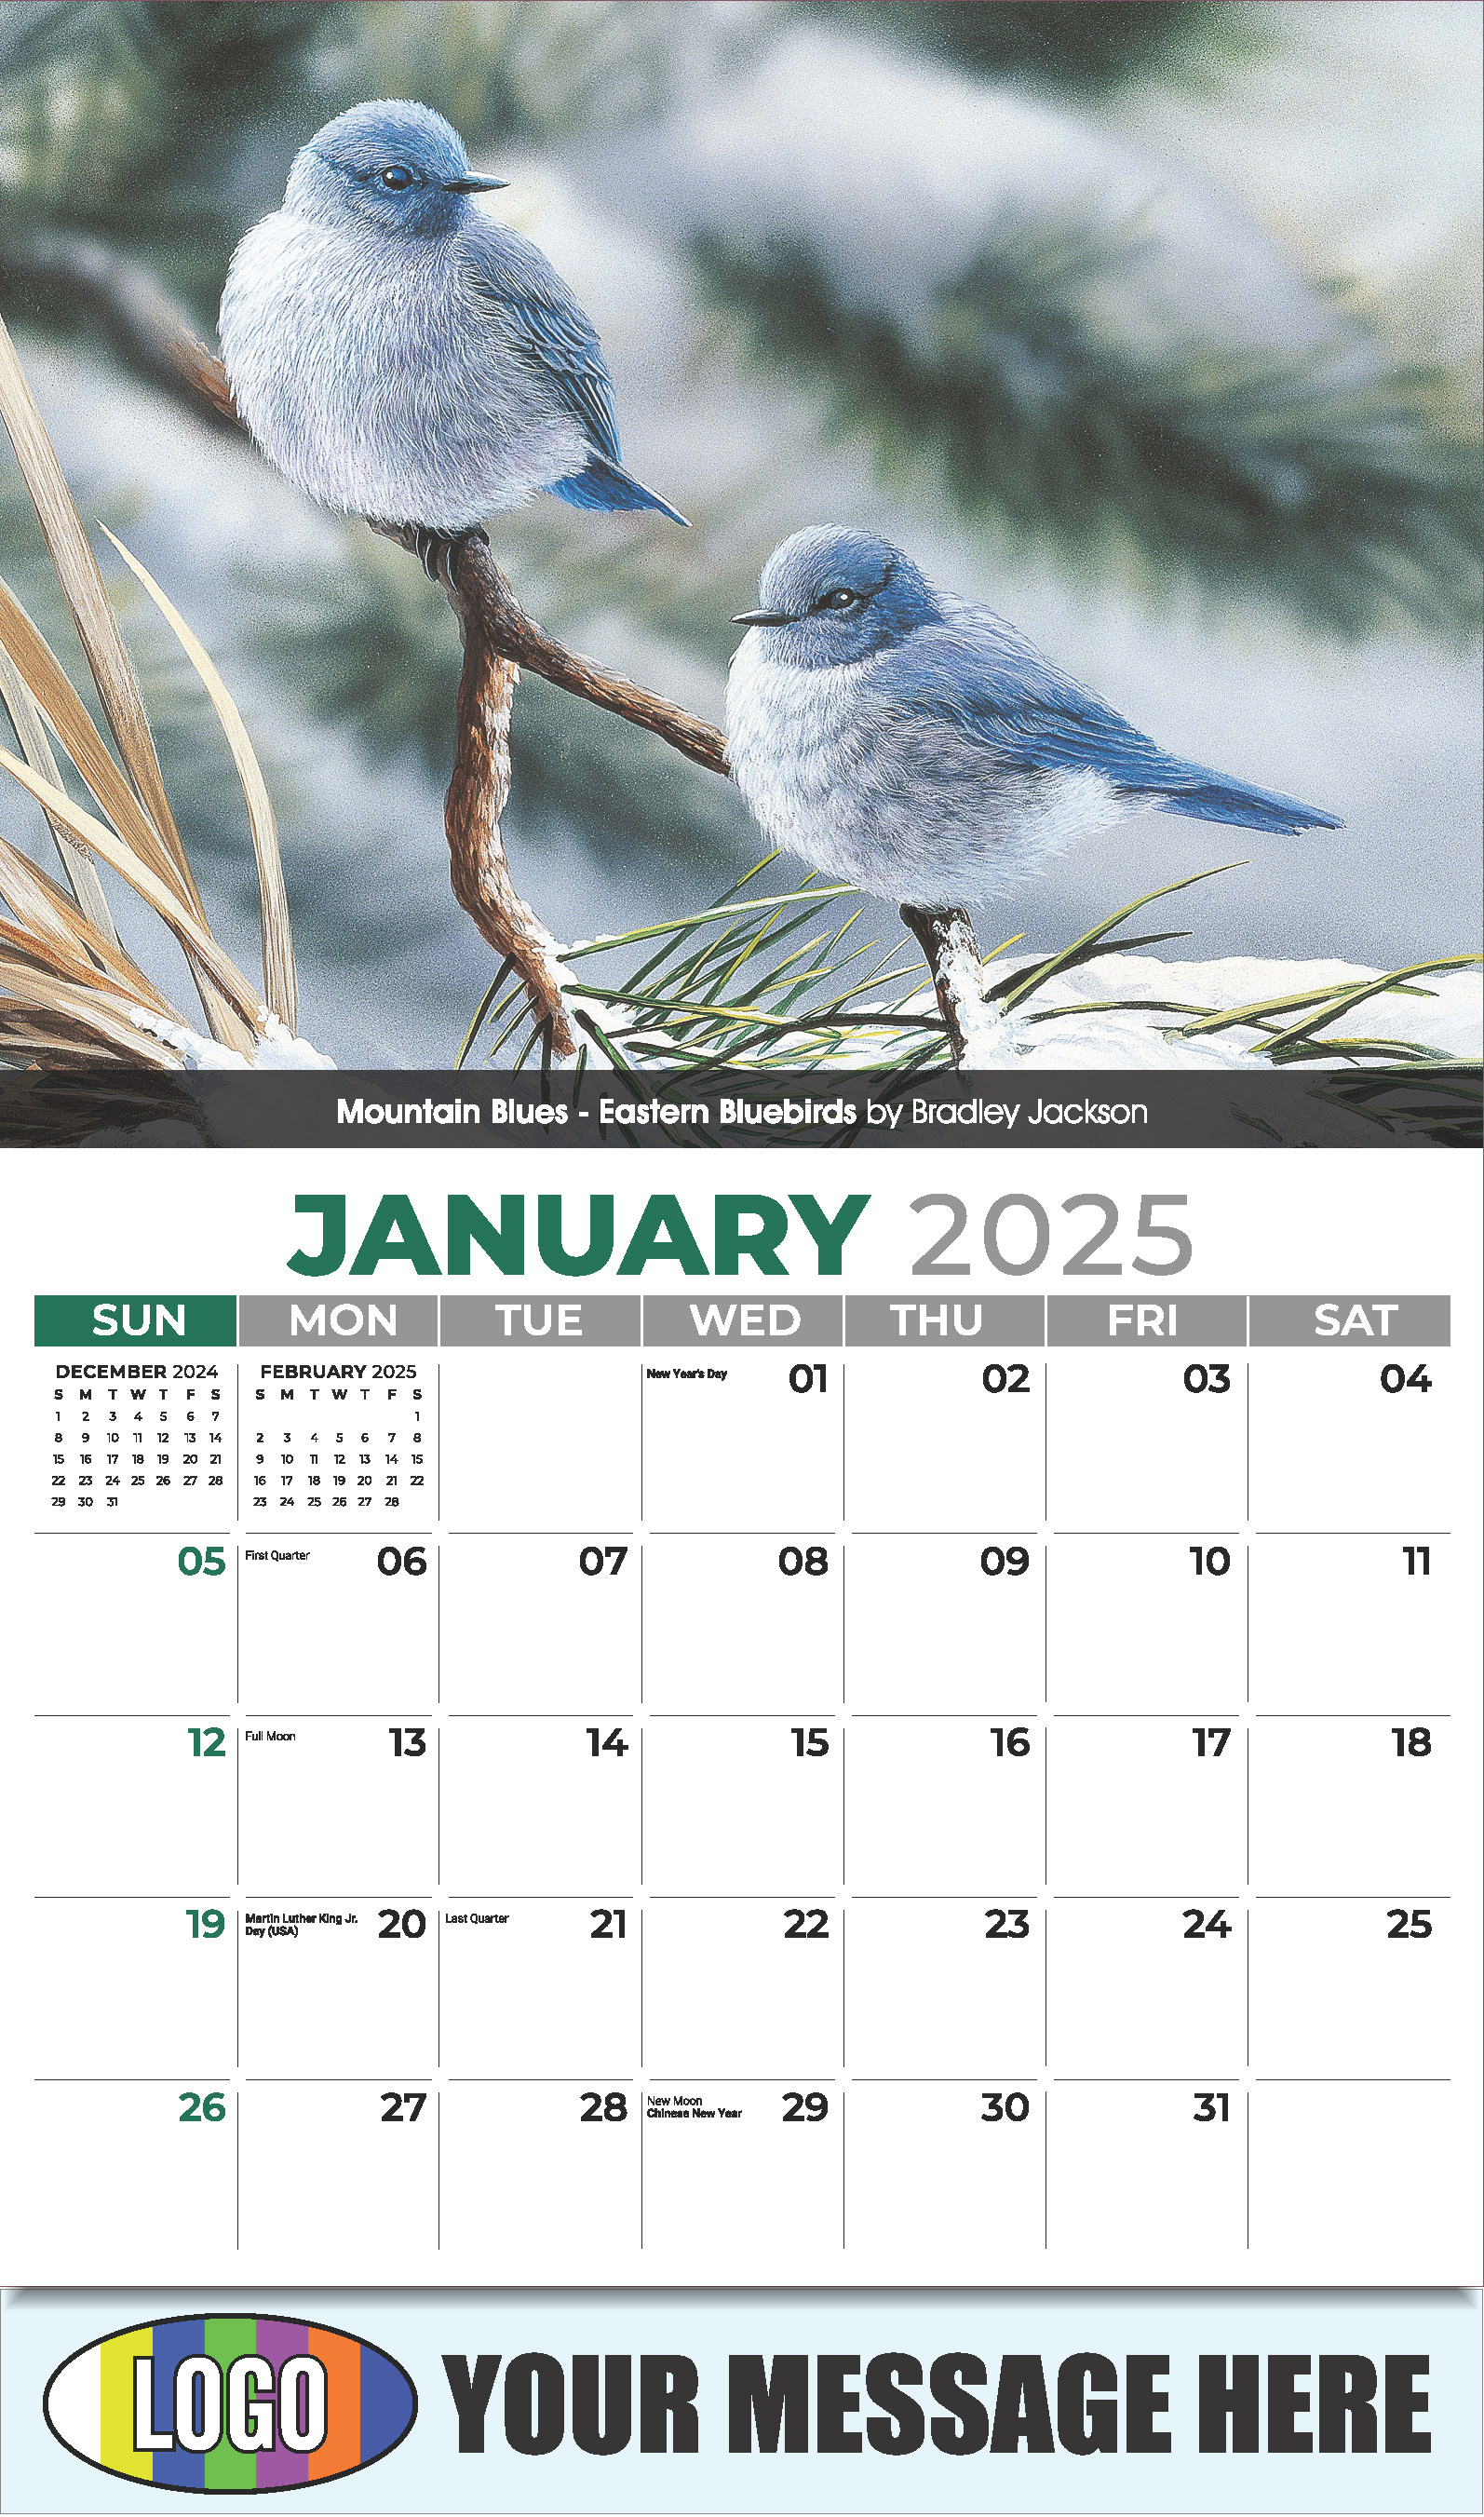 Garden Birds 2025 Business Promotional Calendar - January